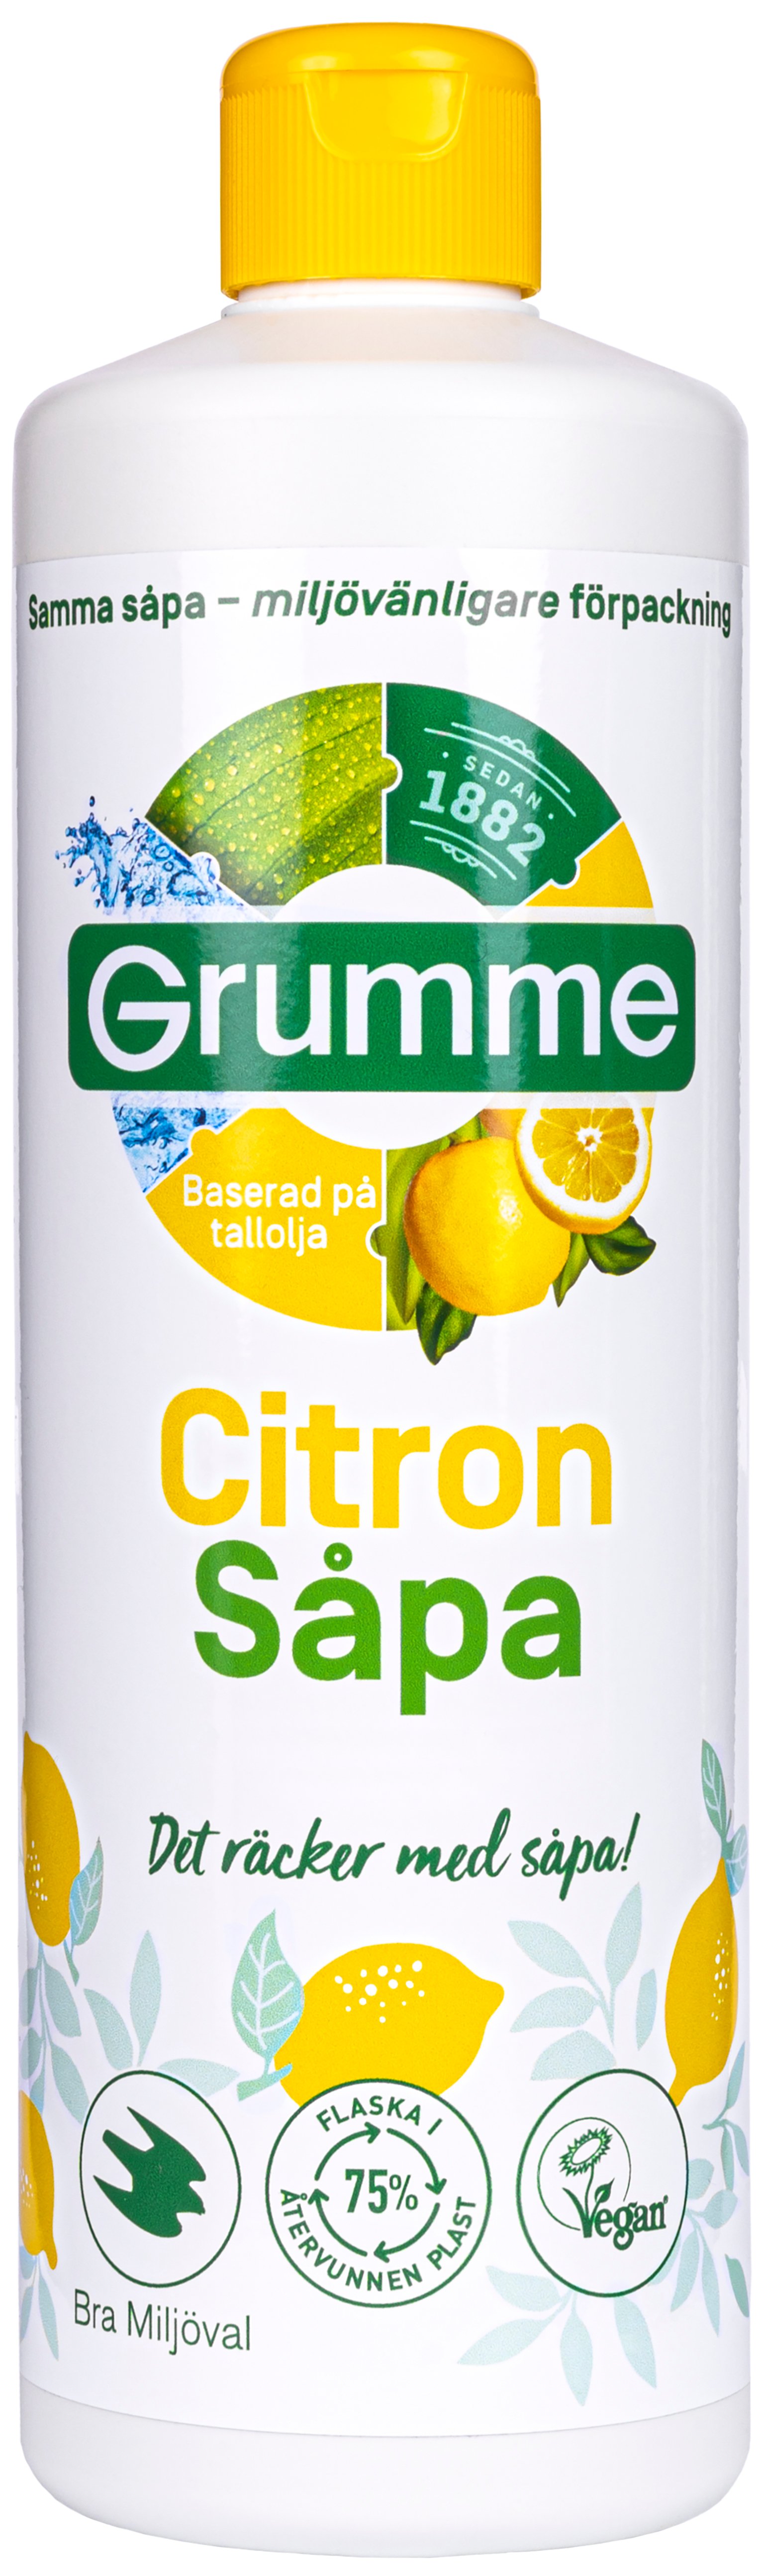 Grumme Såpa Citron 750 ml